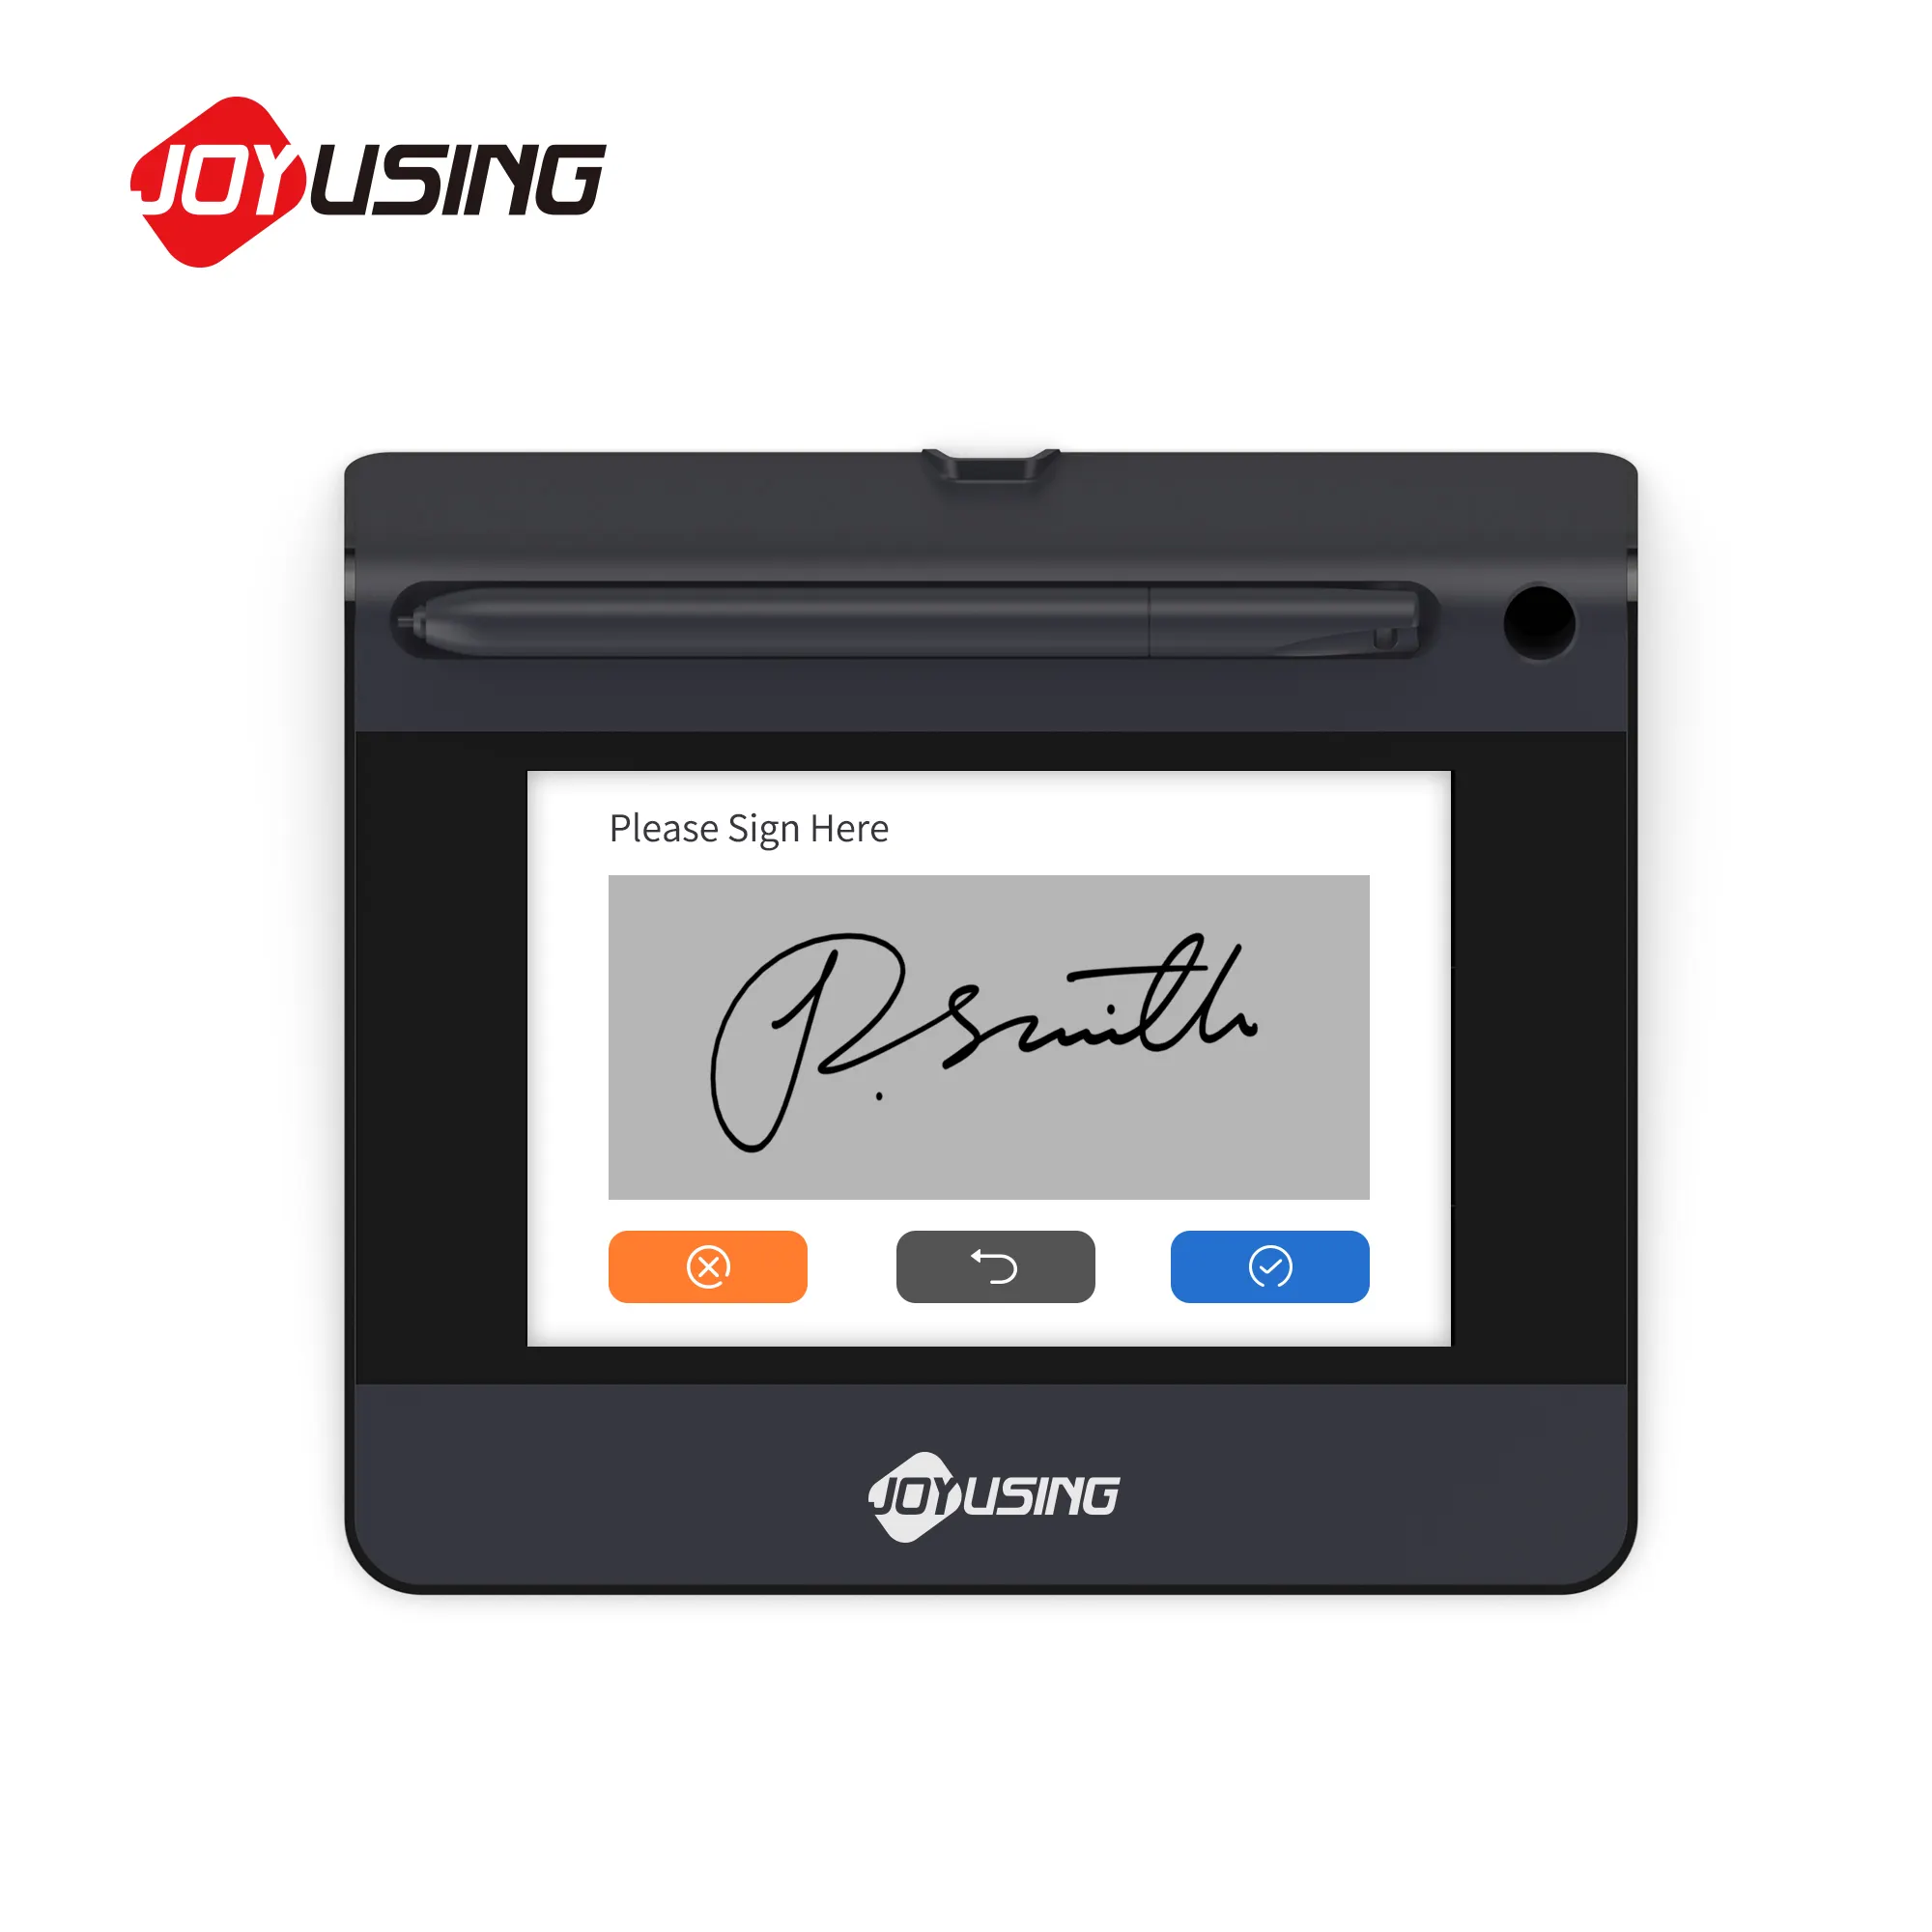 JOY USING SP550 Advanced LCD Signature Pad Elektronische Signatur Schreib block mit Stift Druckstufen